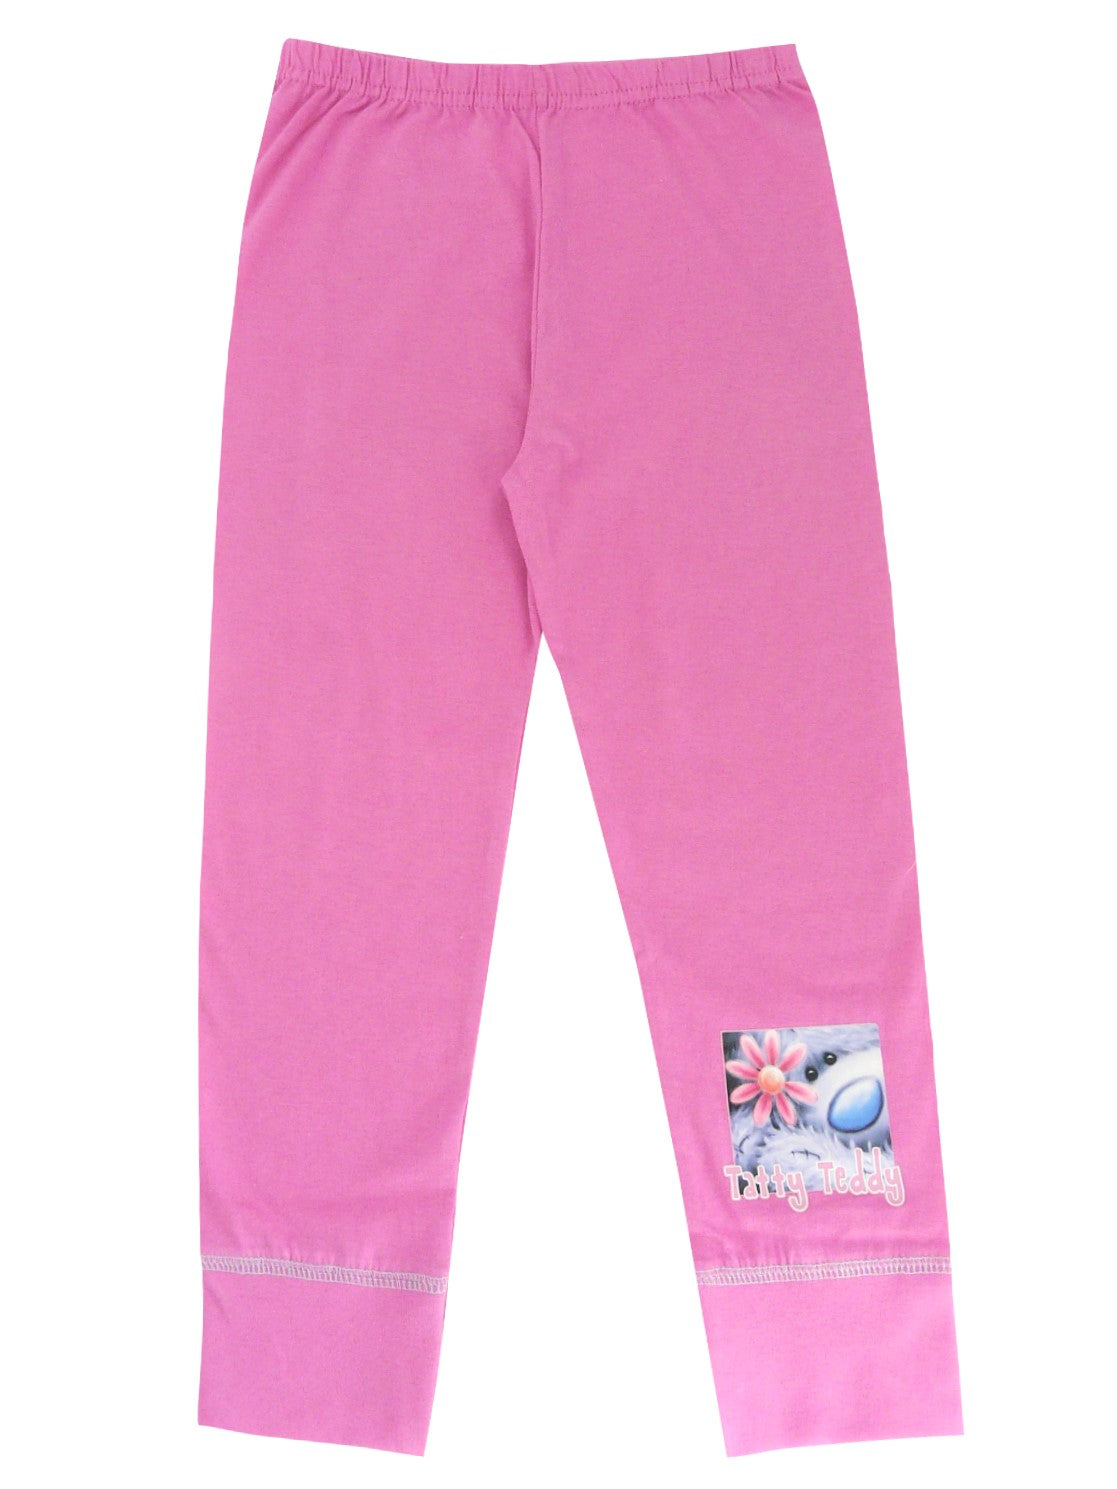 Me to You Tatty Teddy Girls Pink Pyjamas 5-8 Years